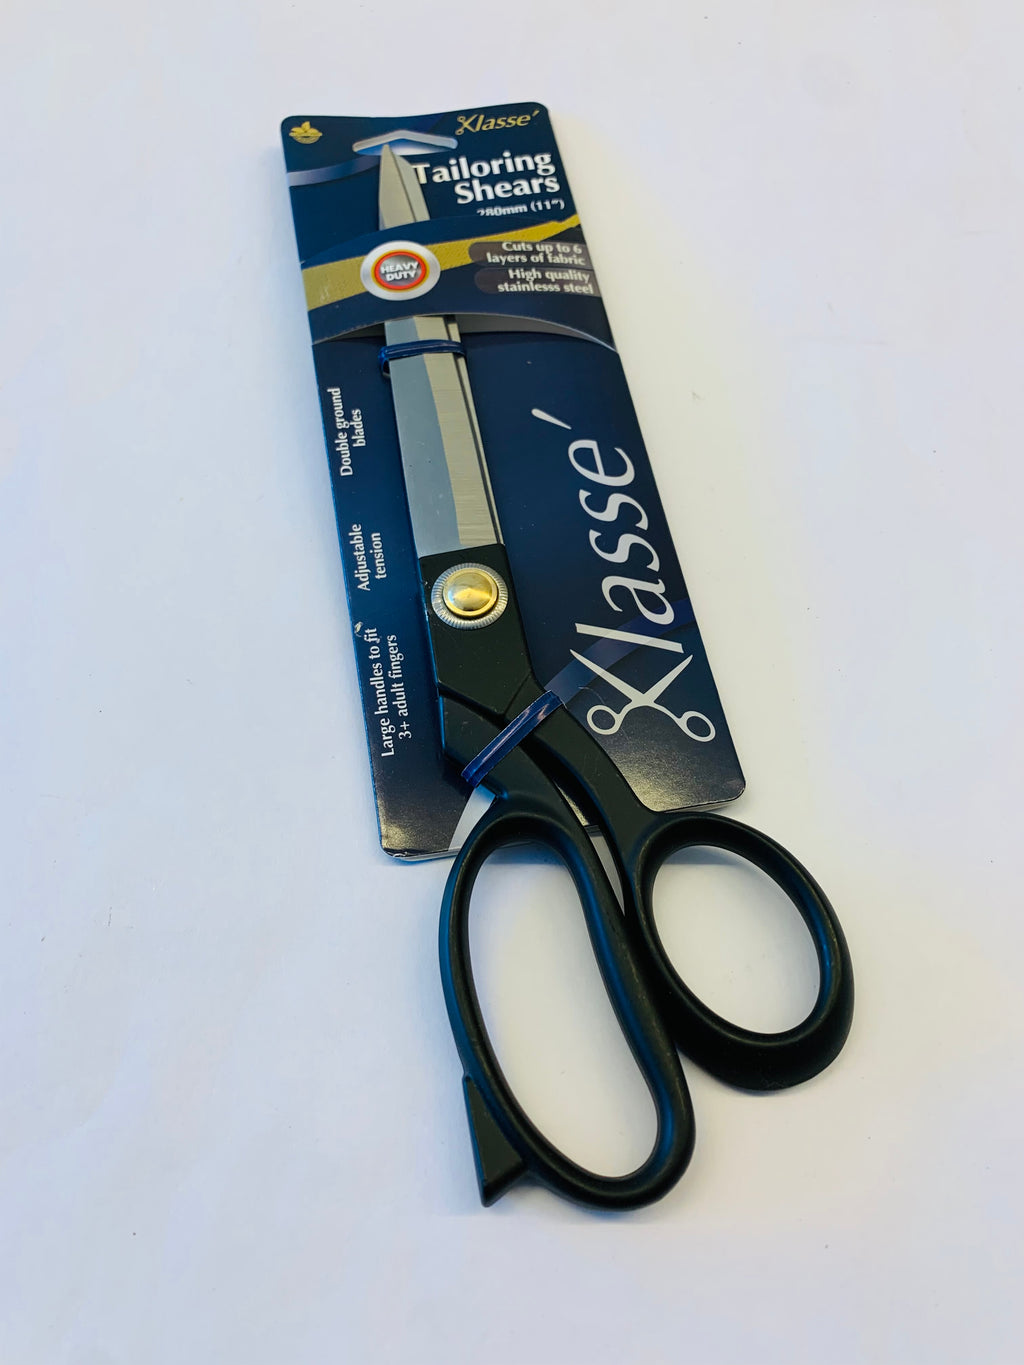 Klasse 11” tailoring scissors